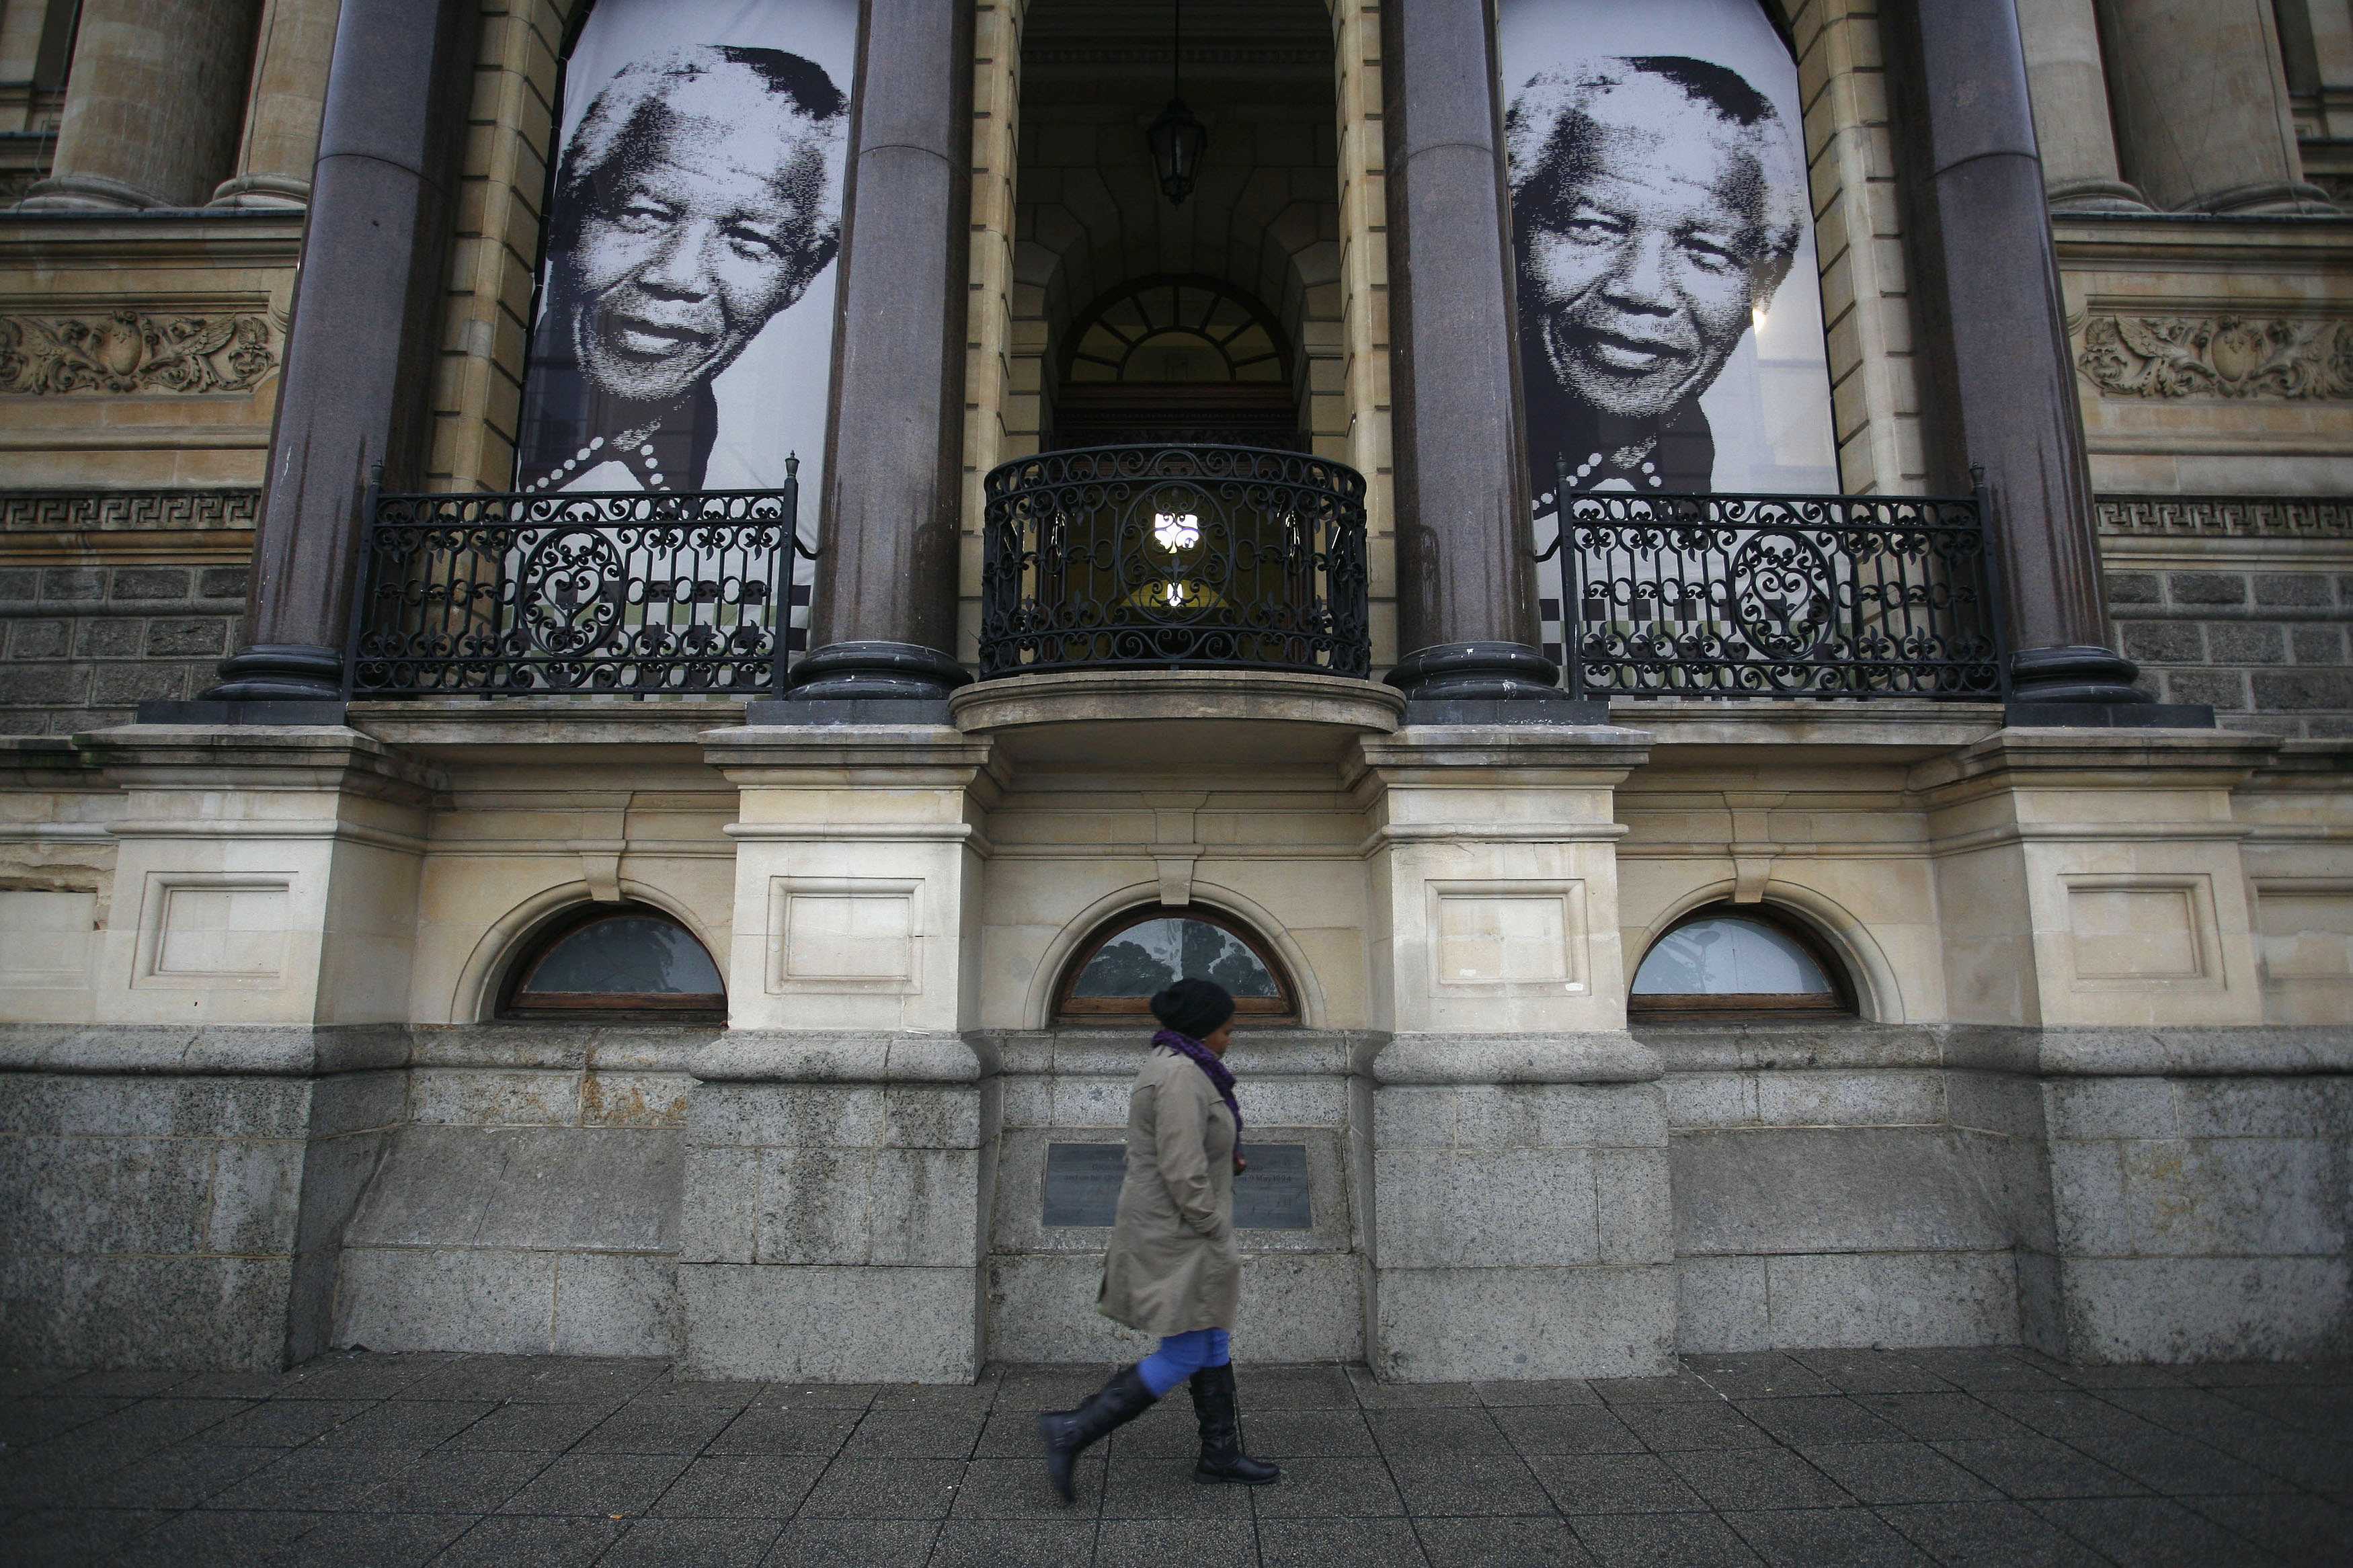 Family gathers as fears grow for 'critical' Mandela